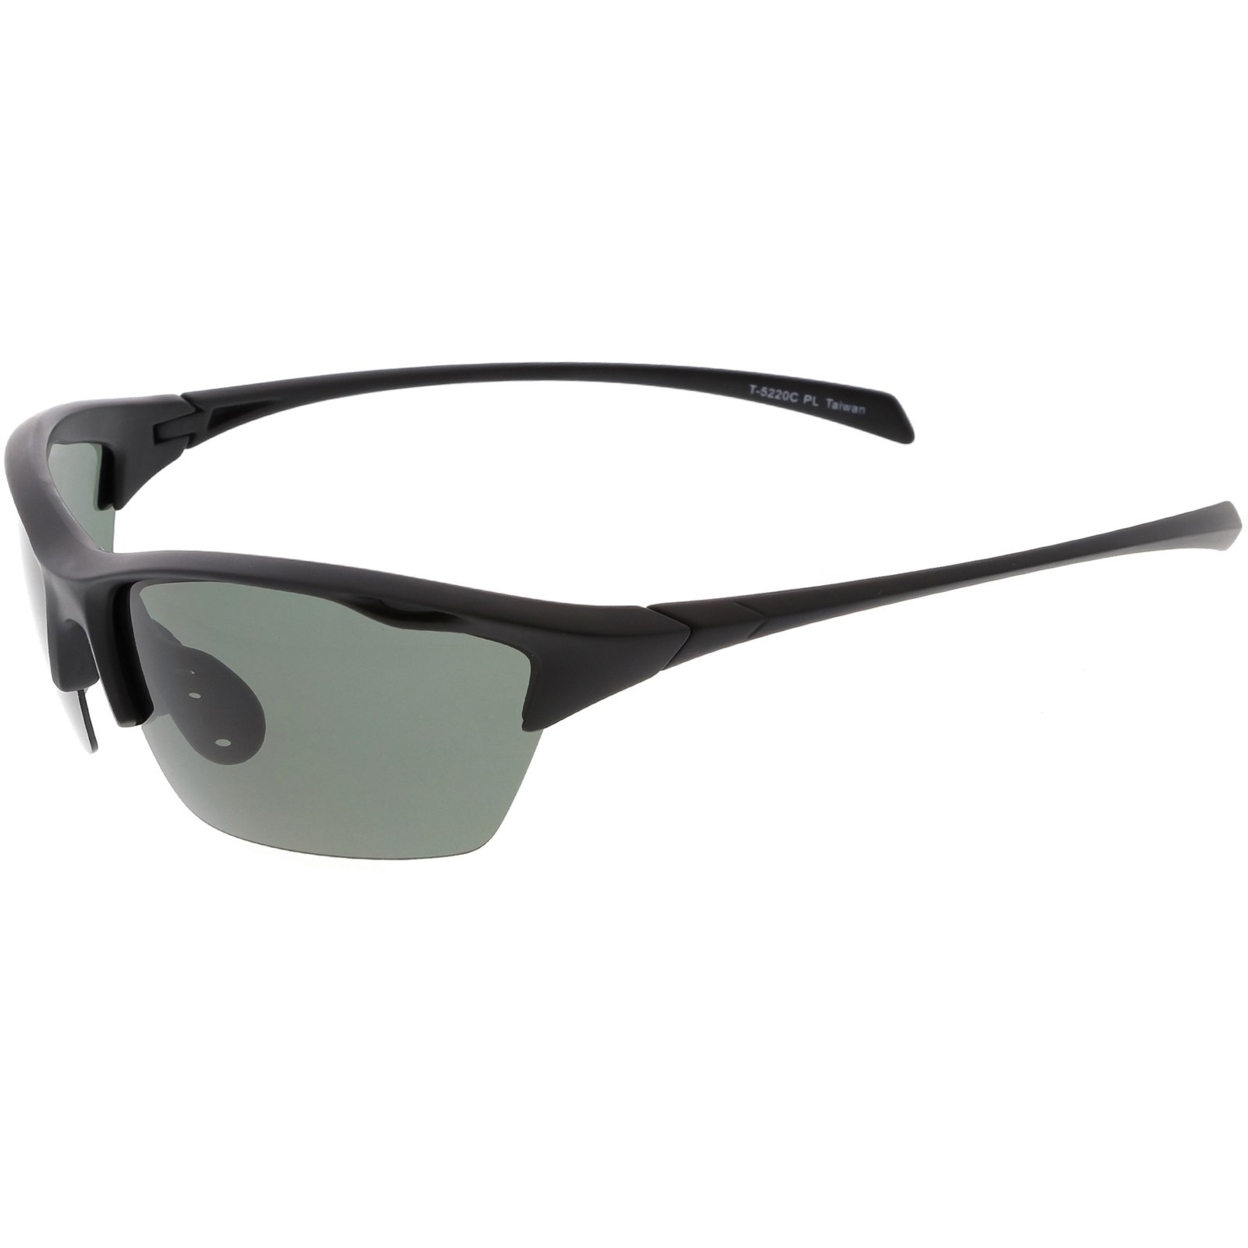 Sports TR-90 Semi-Rimless Wrap Sunglasses Ventilation Holes Polarized Lens 68mm - Shiny Black / Smoke